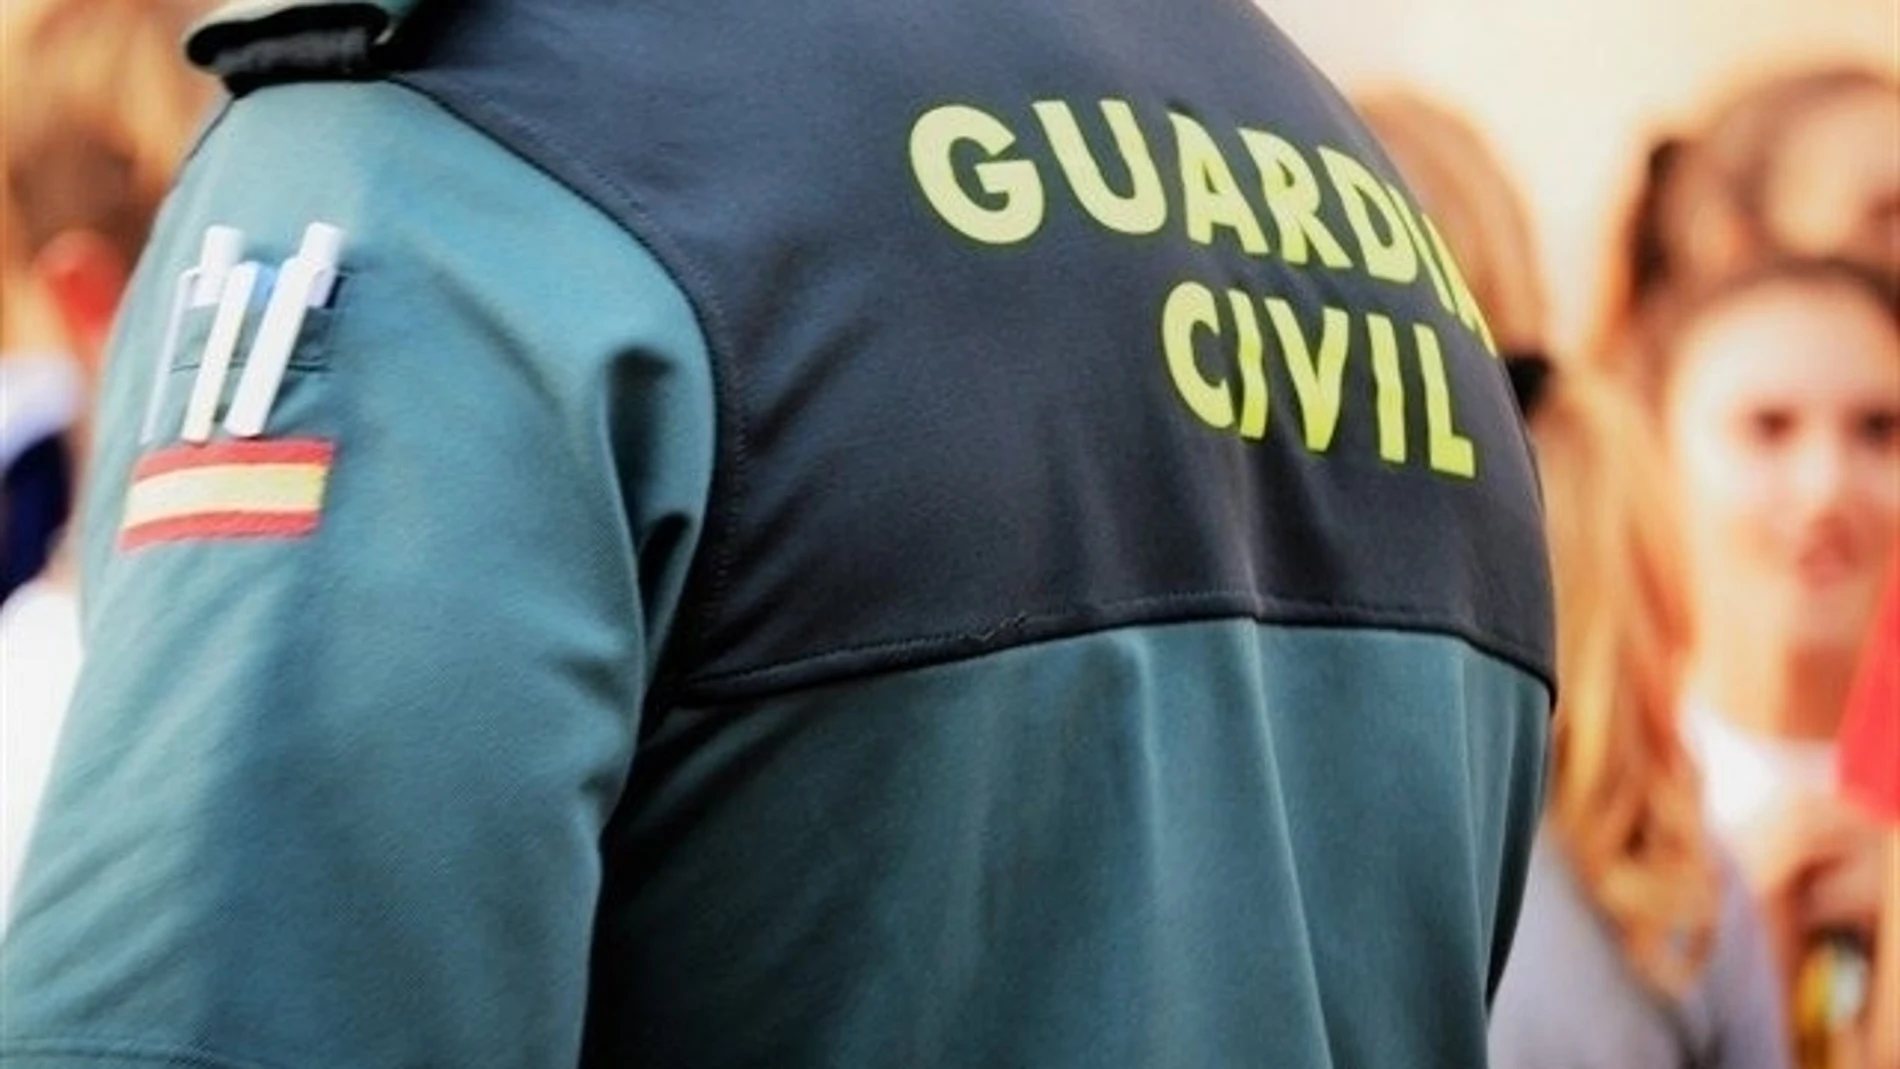 La mujer acudió a la Guardia Civil para denunciar a su ex / Foto: EP